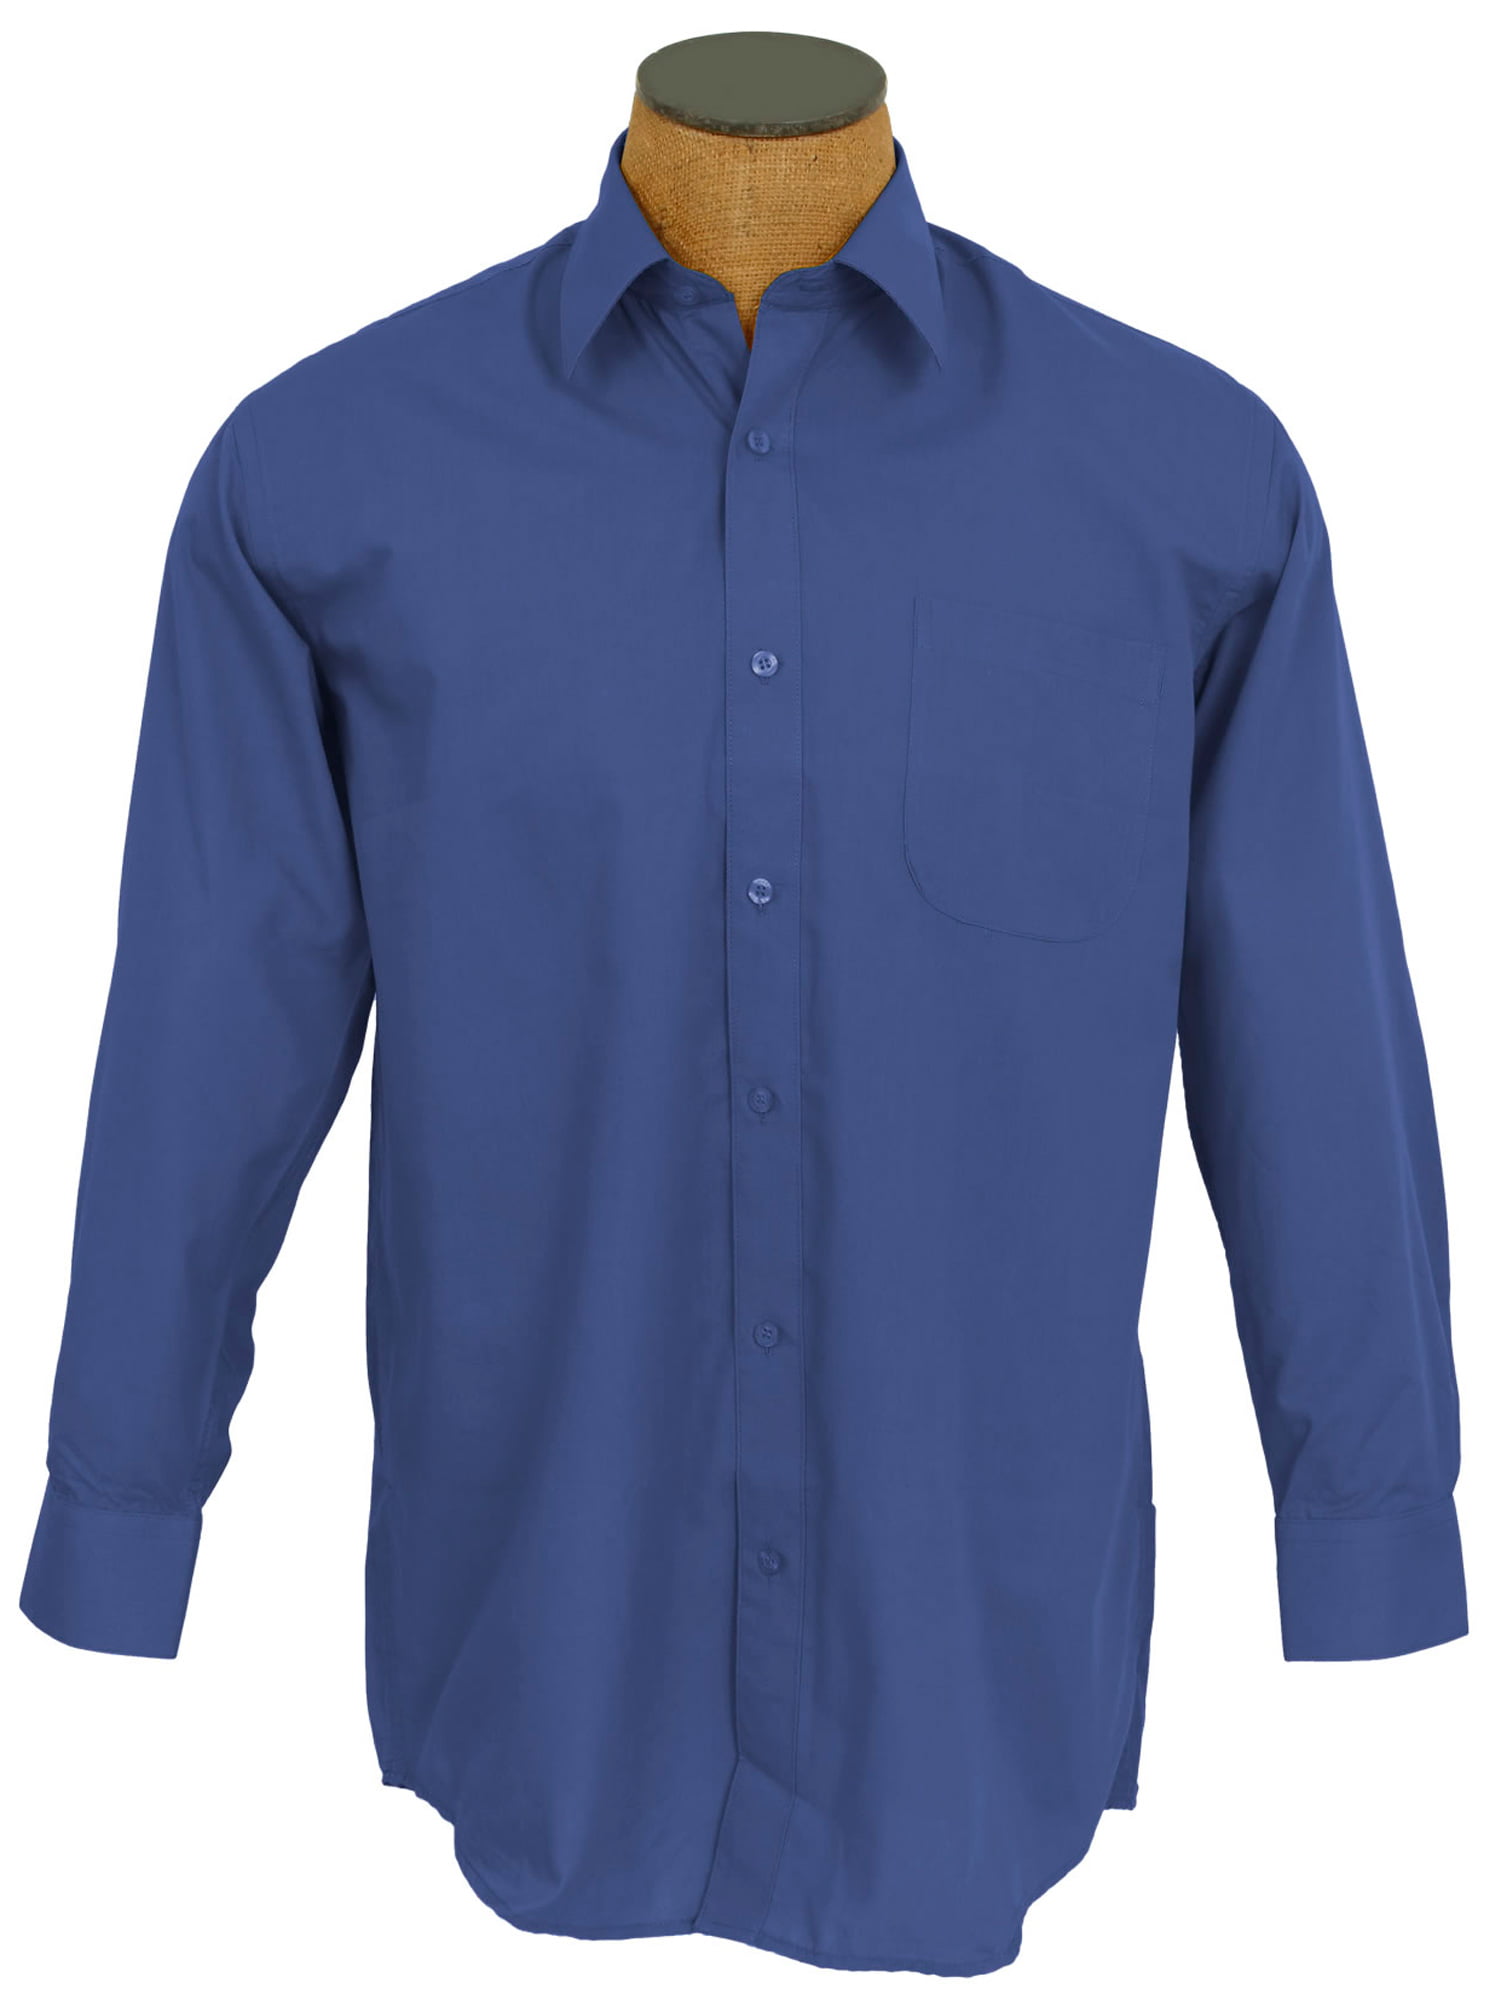 Men's Solid Color Cotton Blend Dress Shirt - Walmart.com